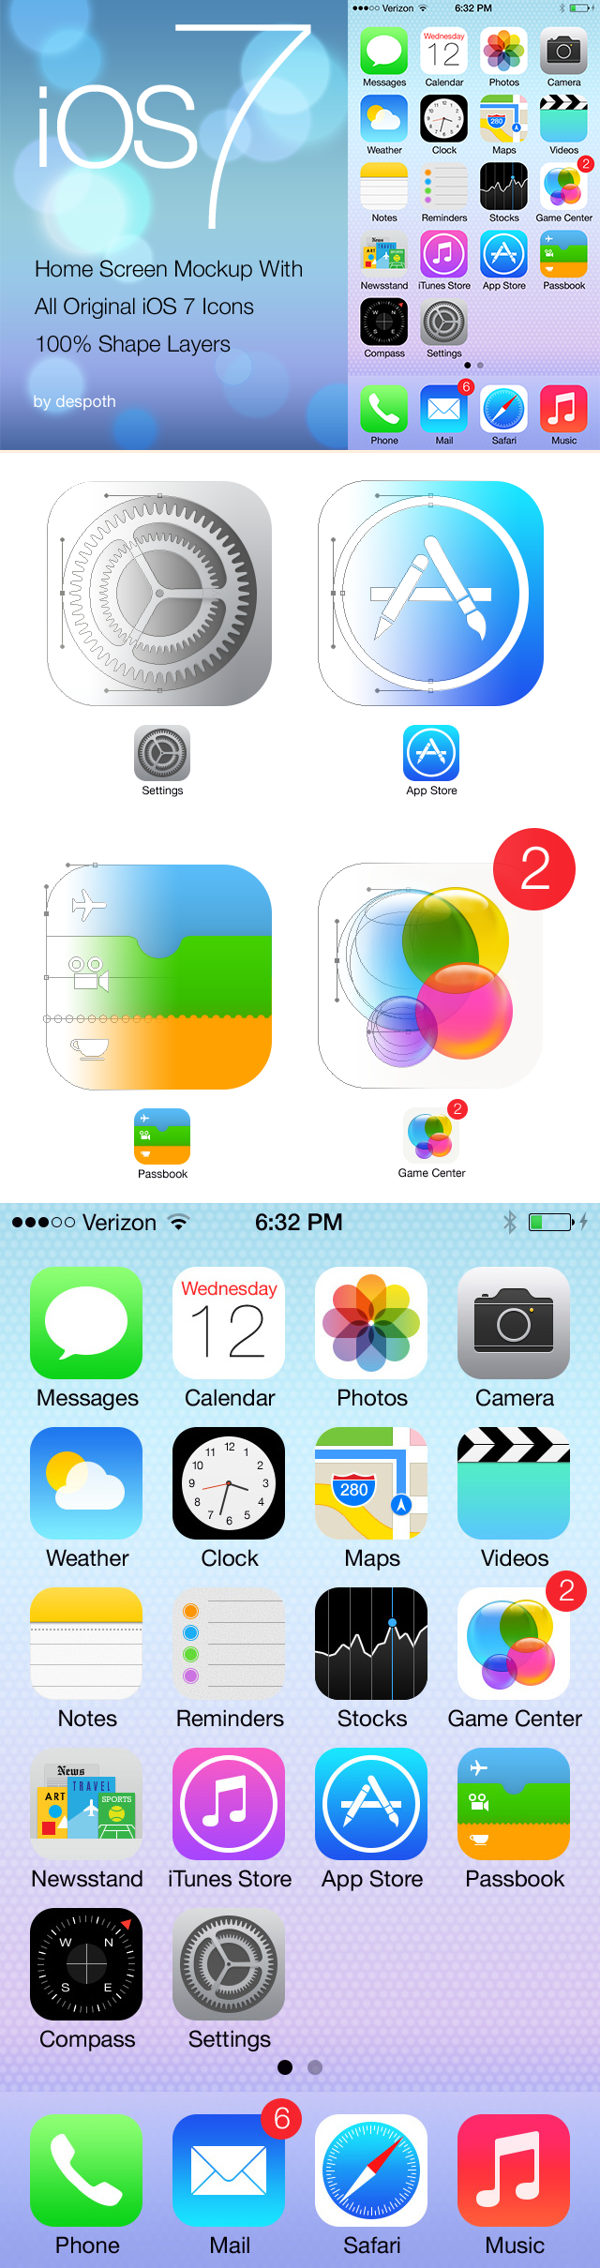 iOS 7 Home Screen Icons